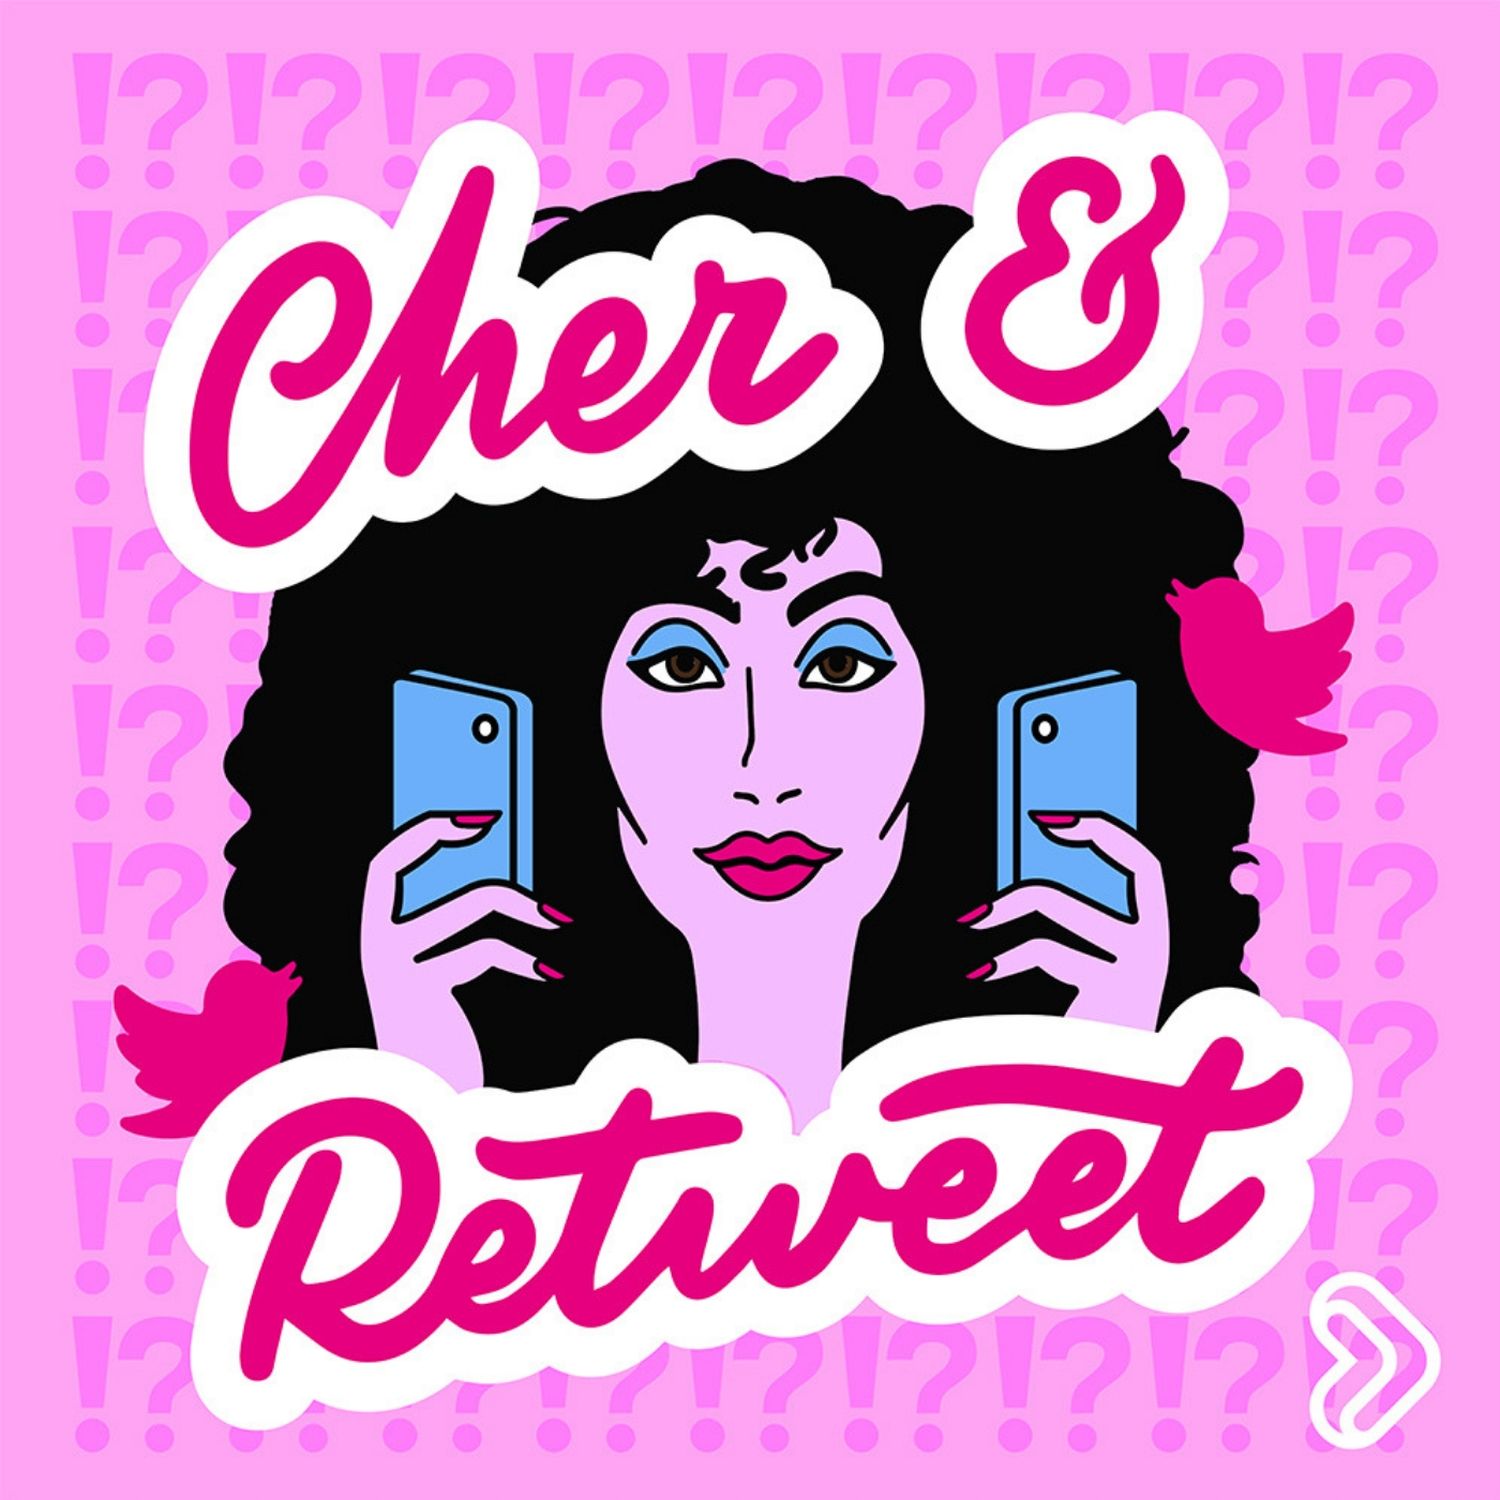 Cher Abba Charts